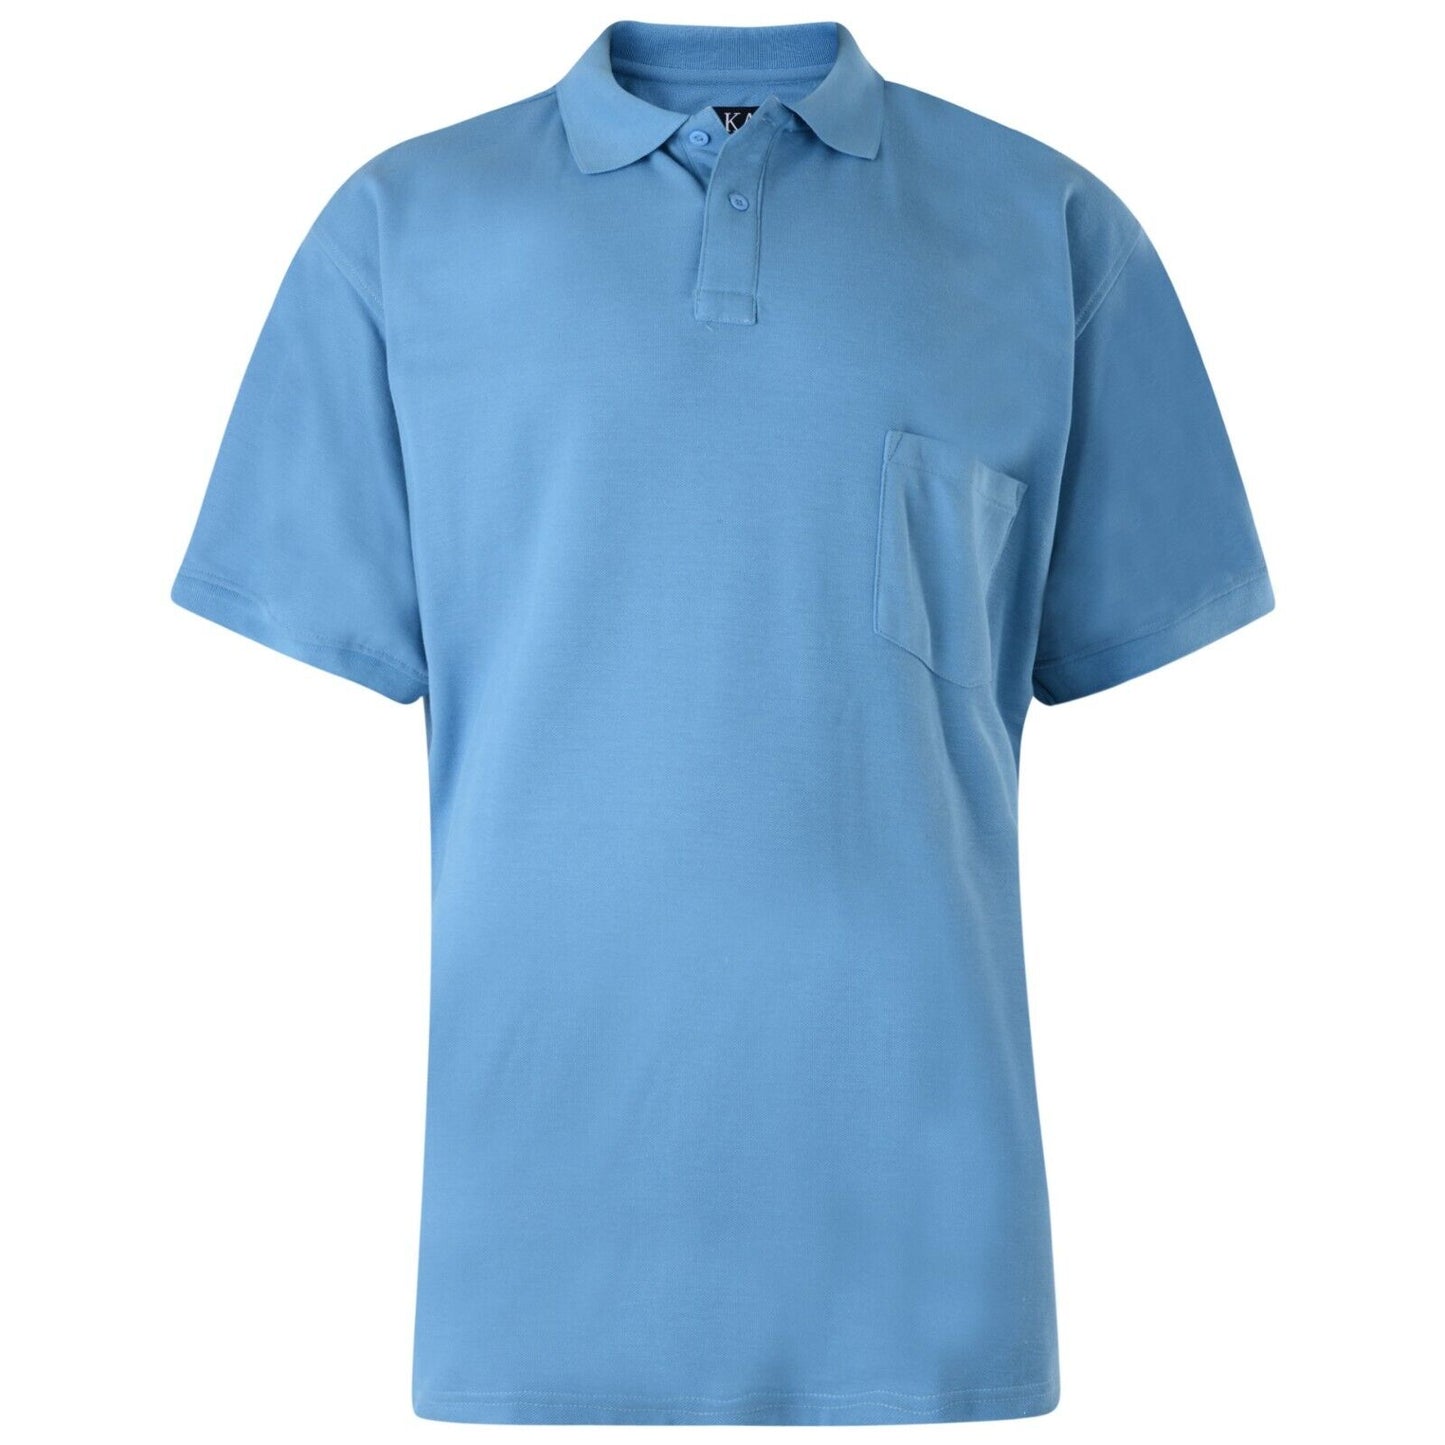 Mens Big Size Polo Shirt Soft Cotton Plain Pique T-Shirt with Pocket 2XL-8XL